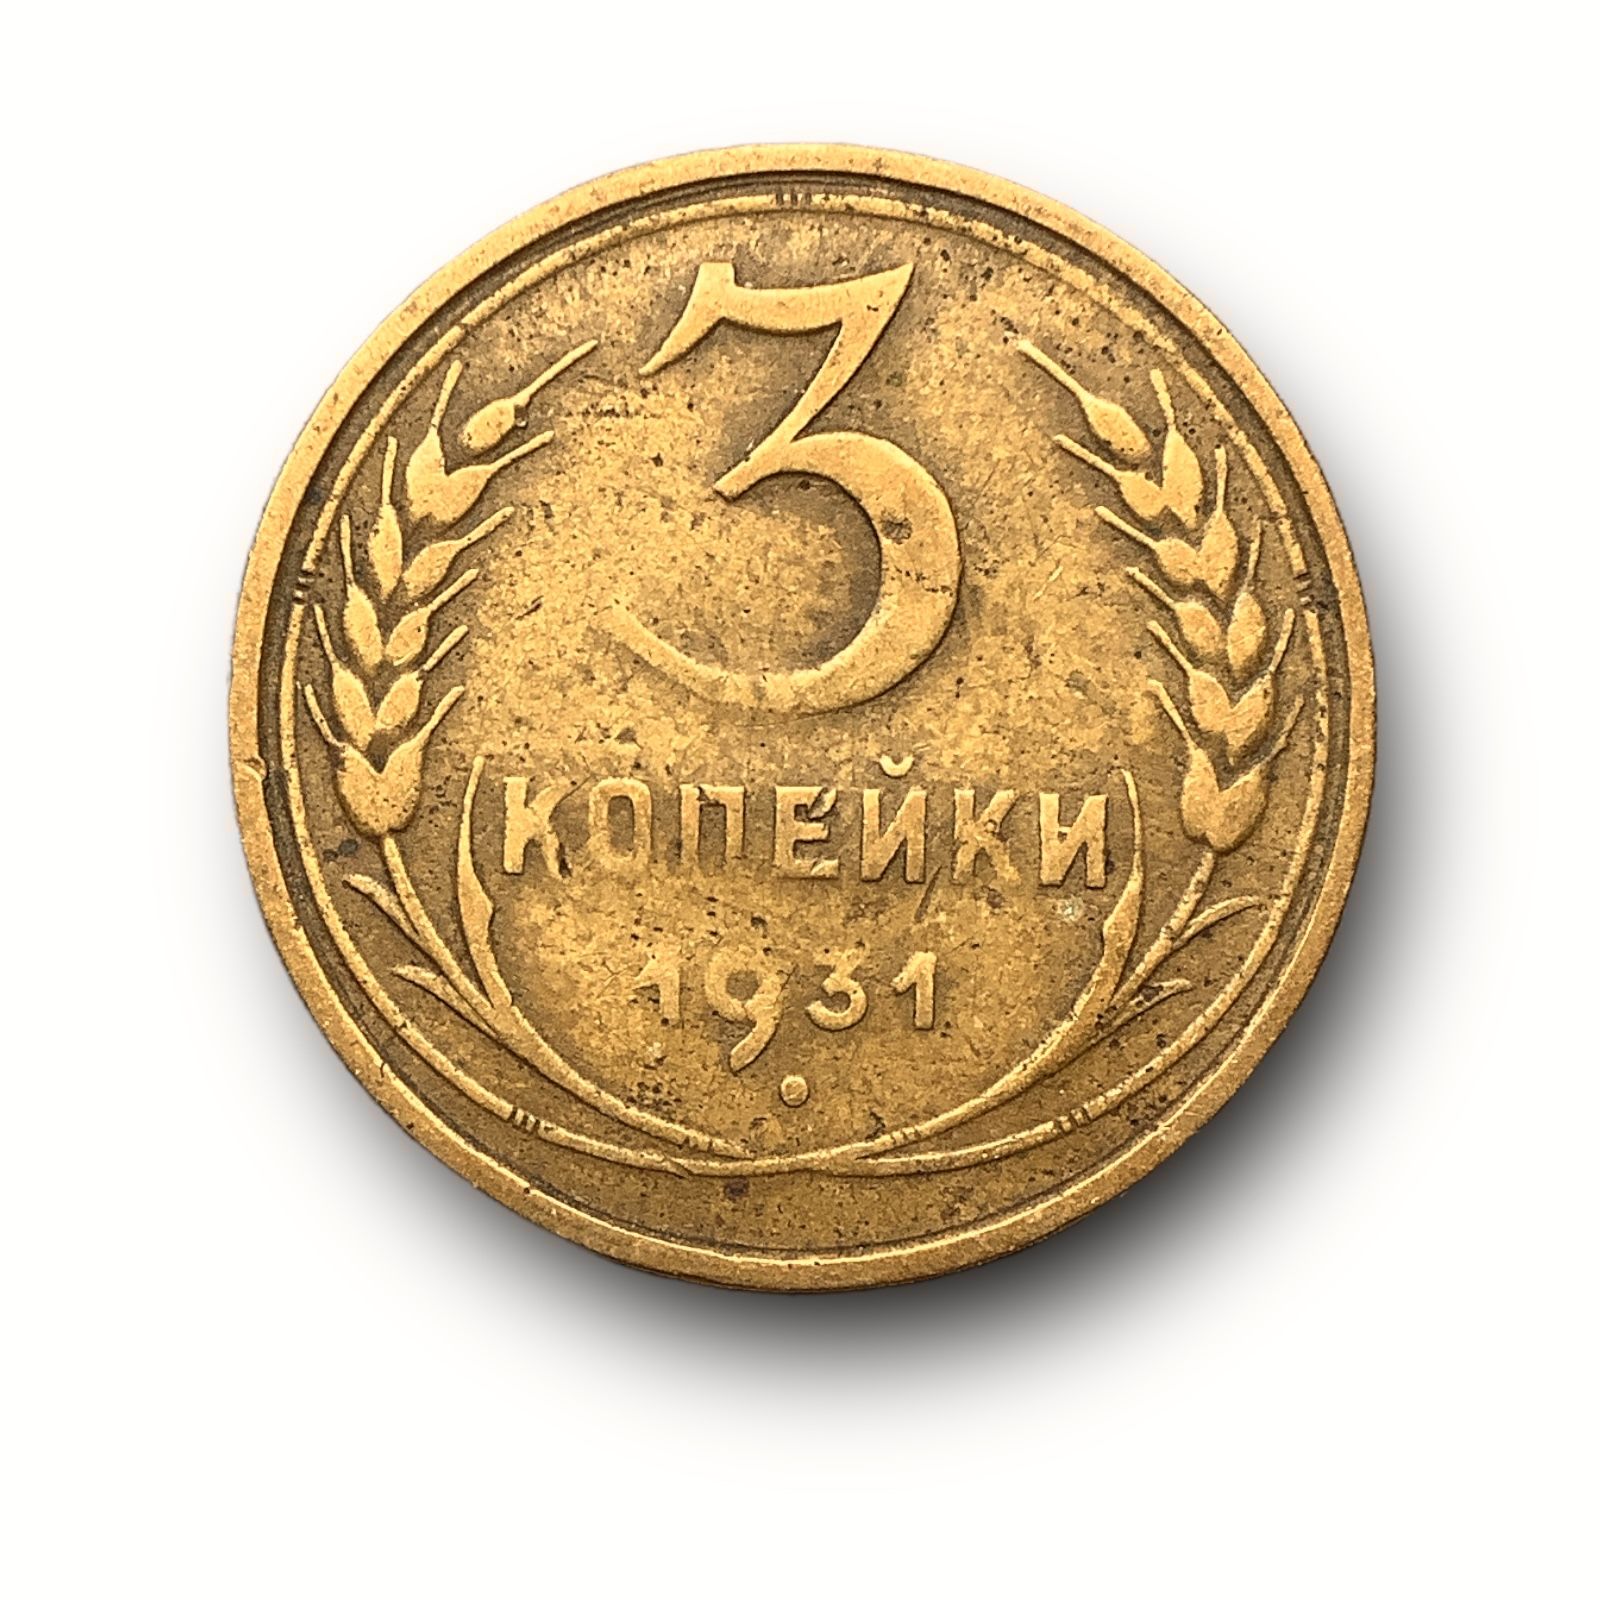 Монета 1931. 5 Копеек 1931 год цена монеты. СССР 3 копейки 1931 год - XF. 3 Копейки 1931 год (выкус).